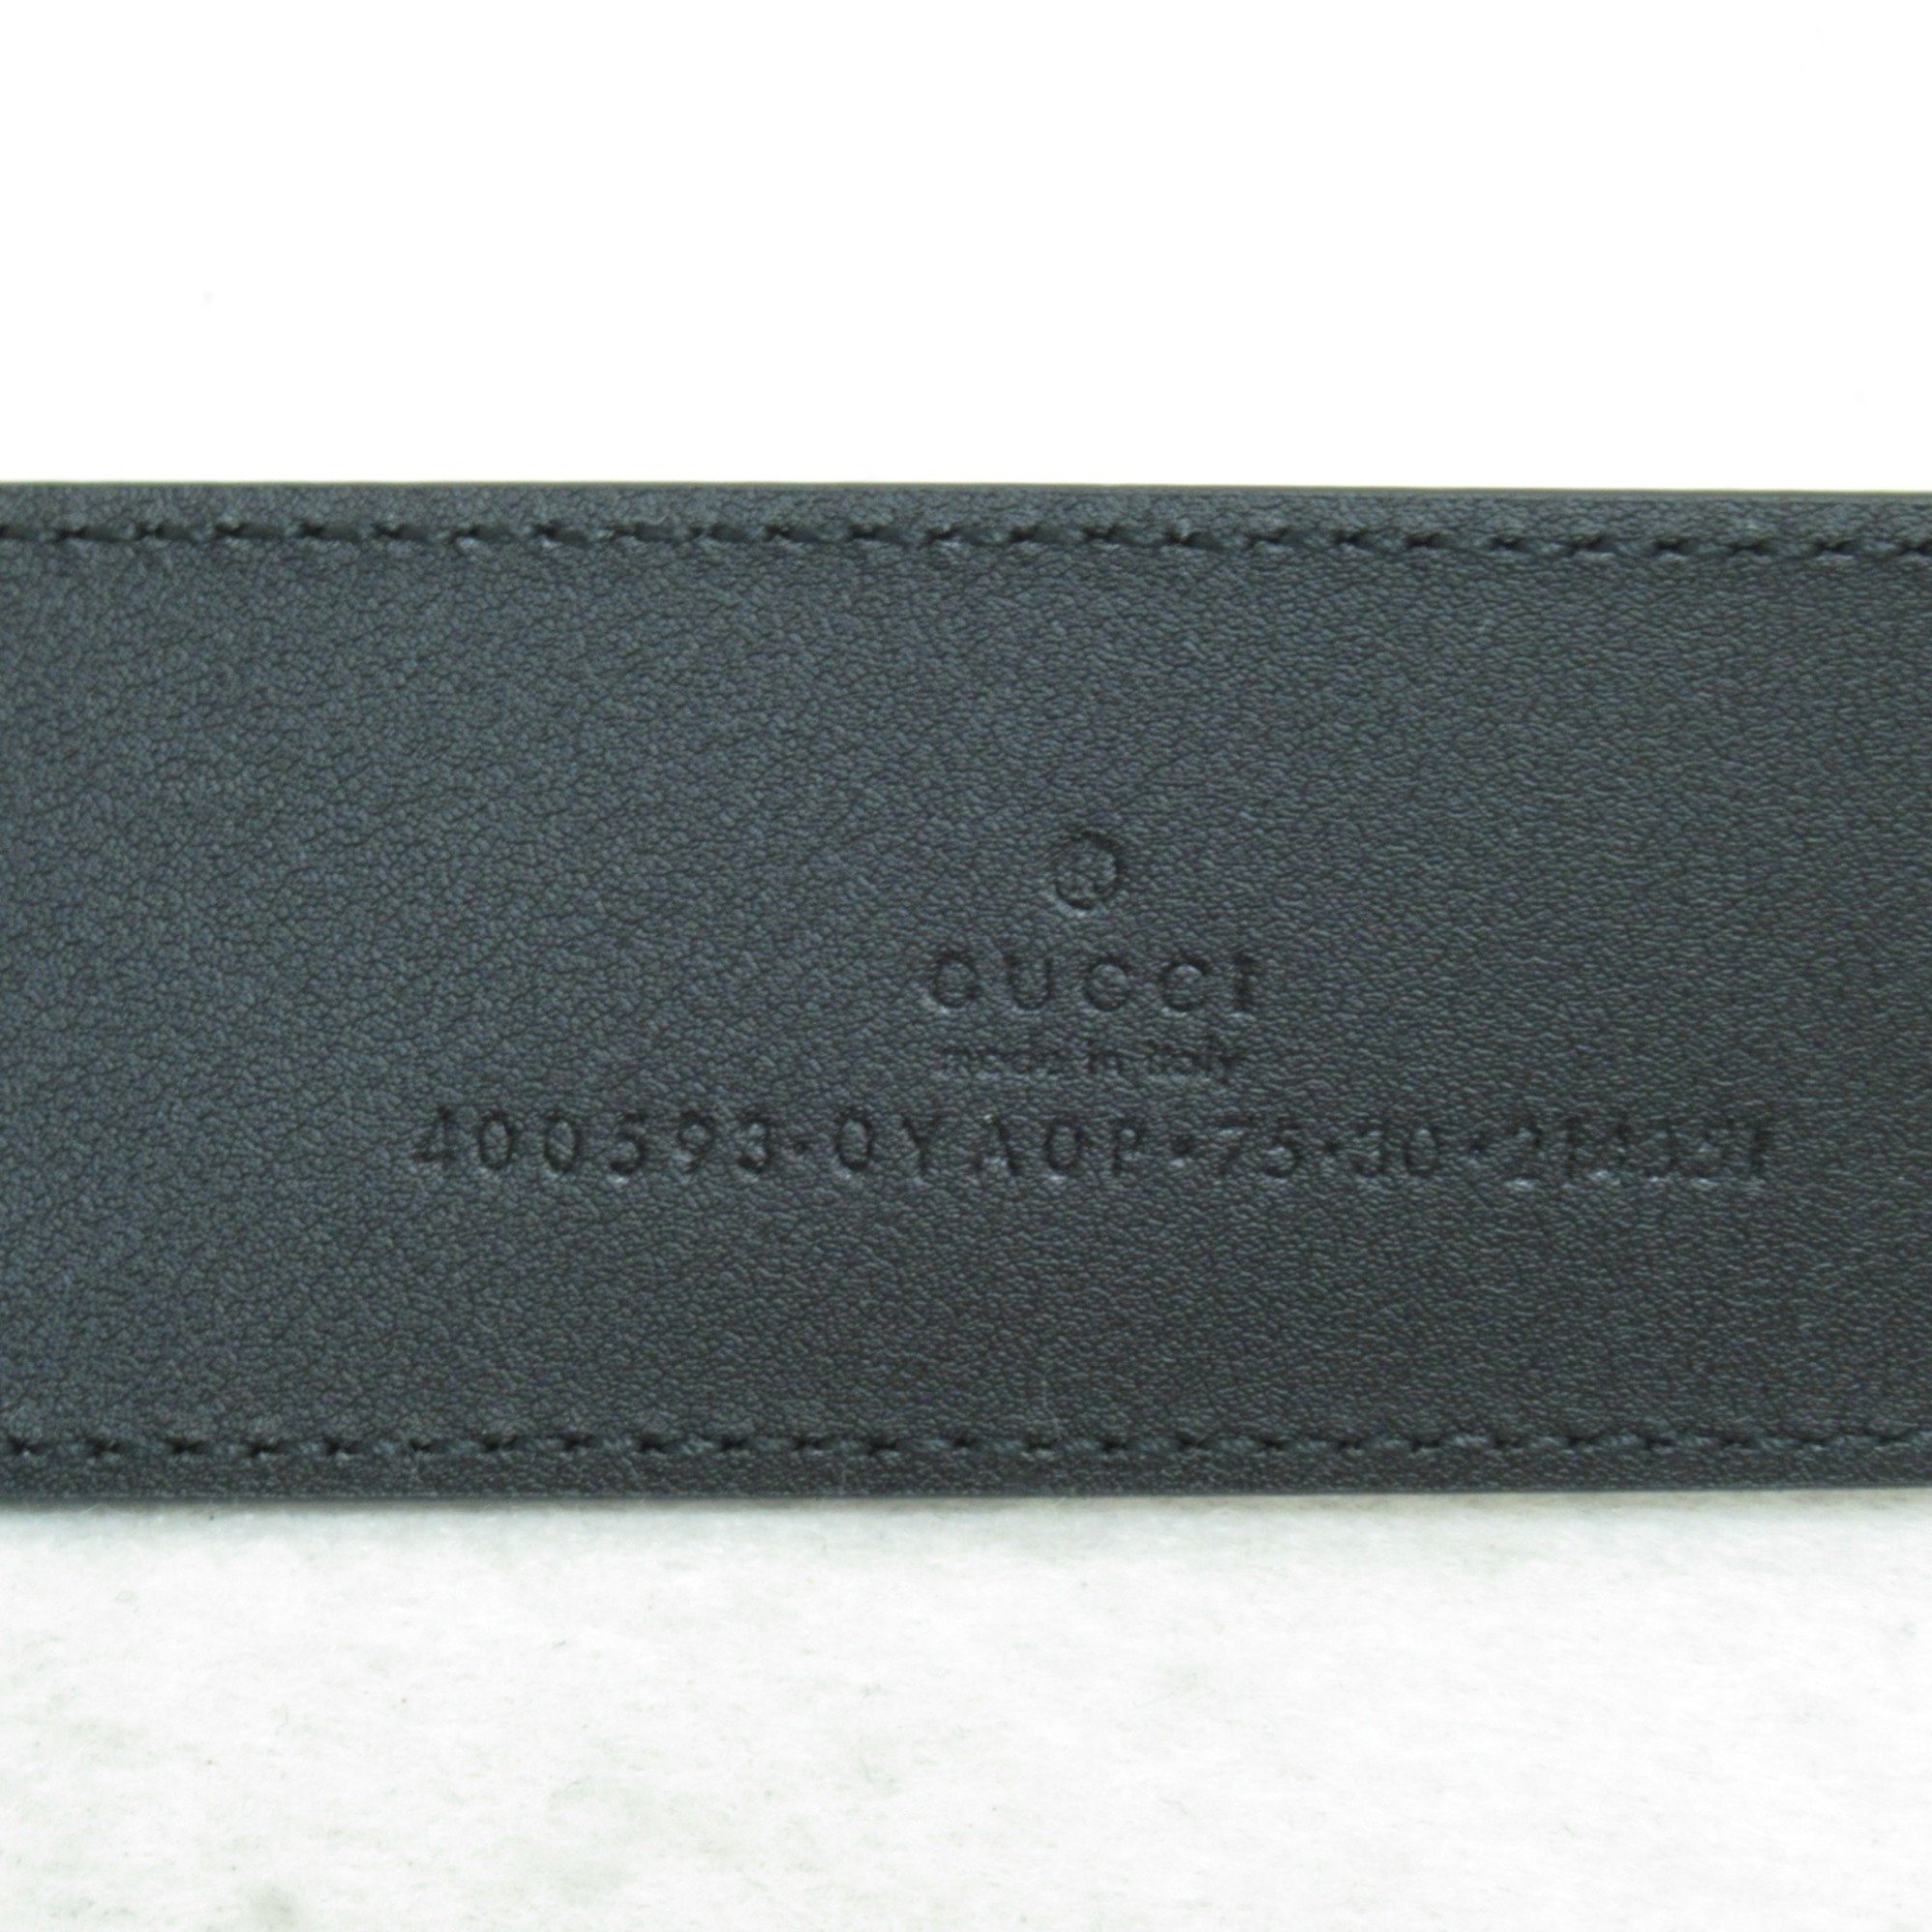 GUCCI belt Black leather 4005930YA0P100075